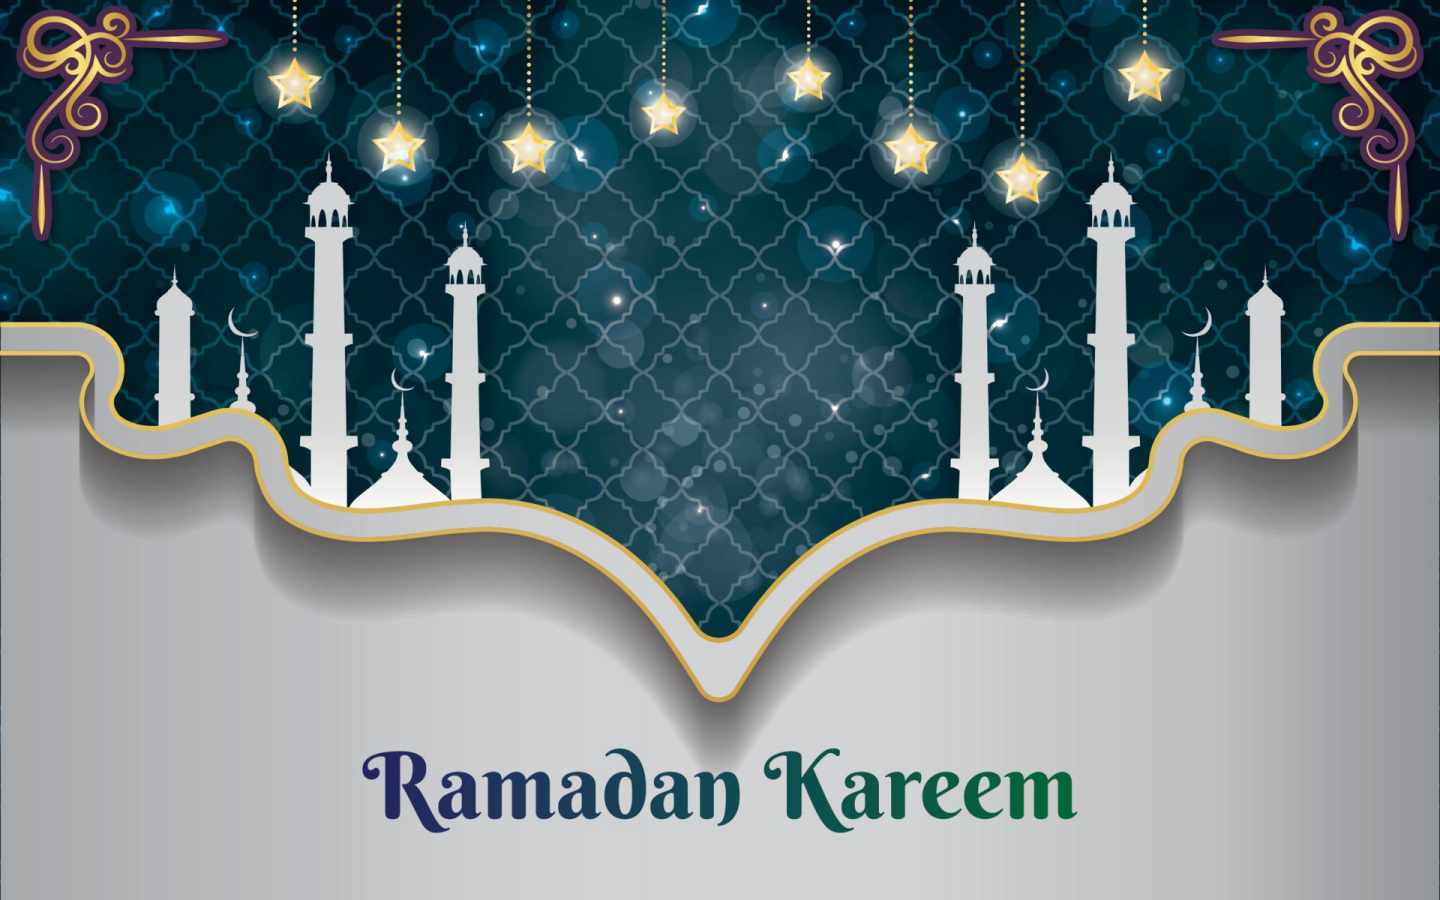 Celebrate Ramadan this year in style with this beautiful Ramadan background.